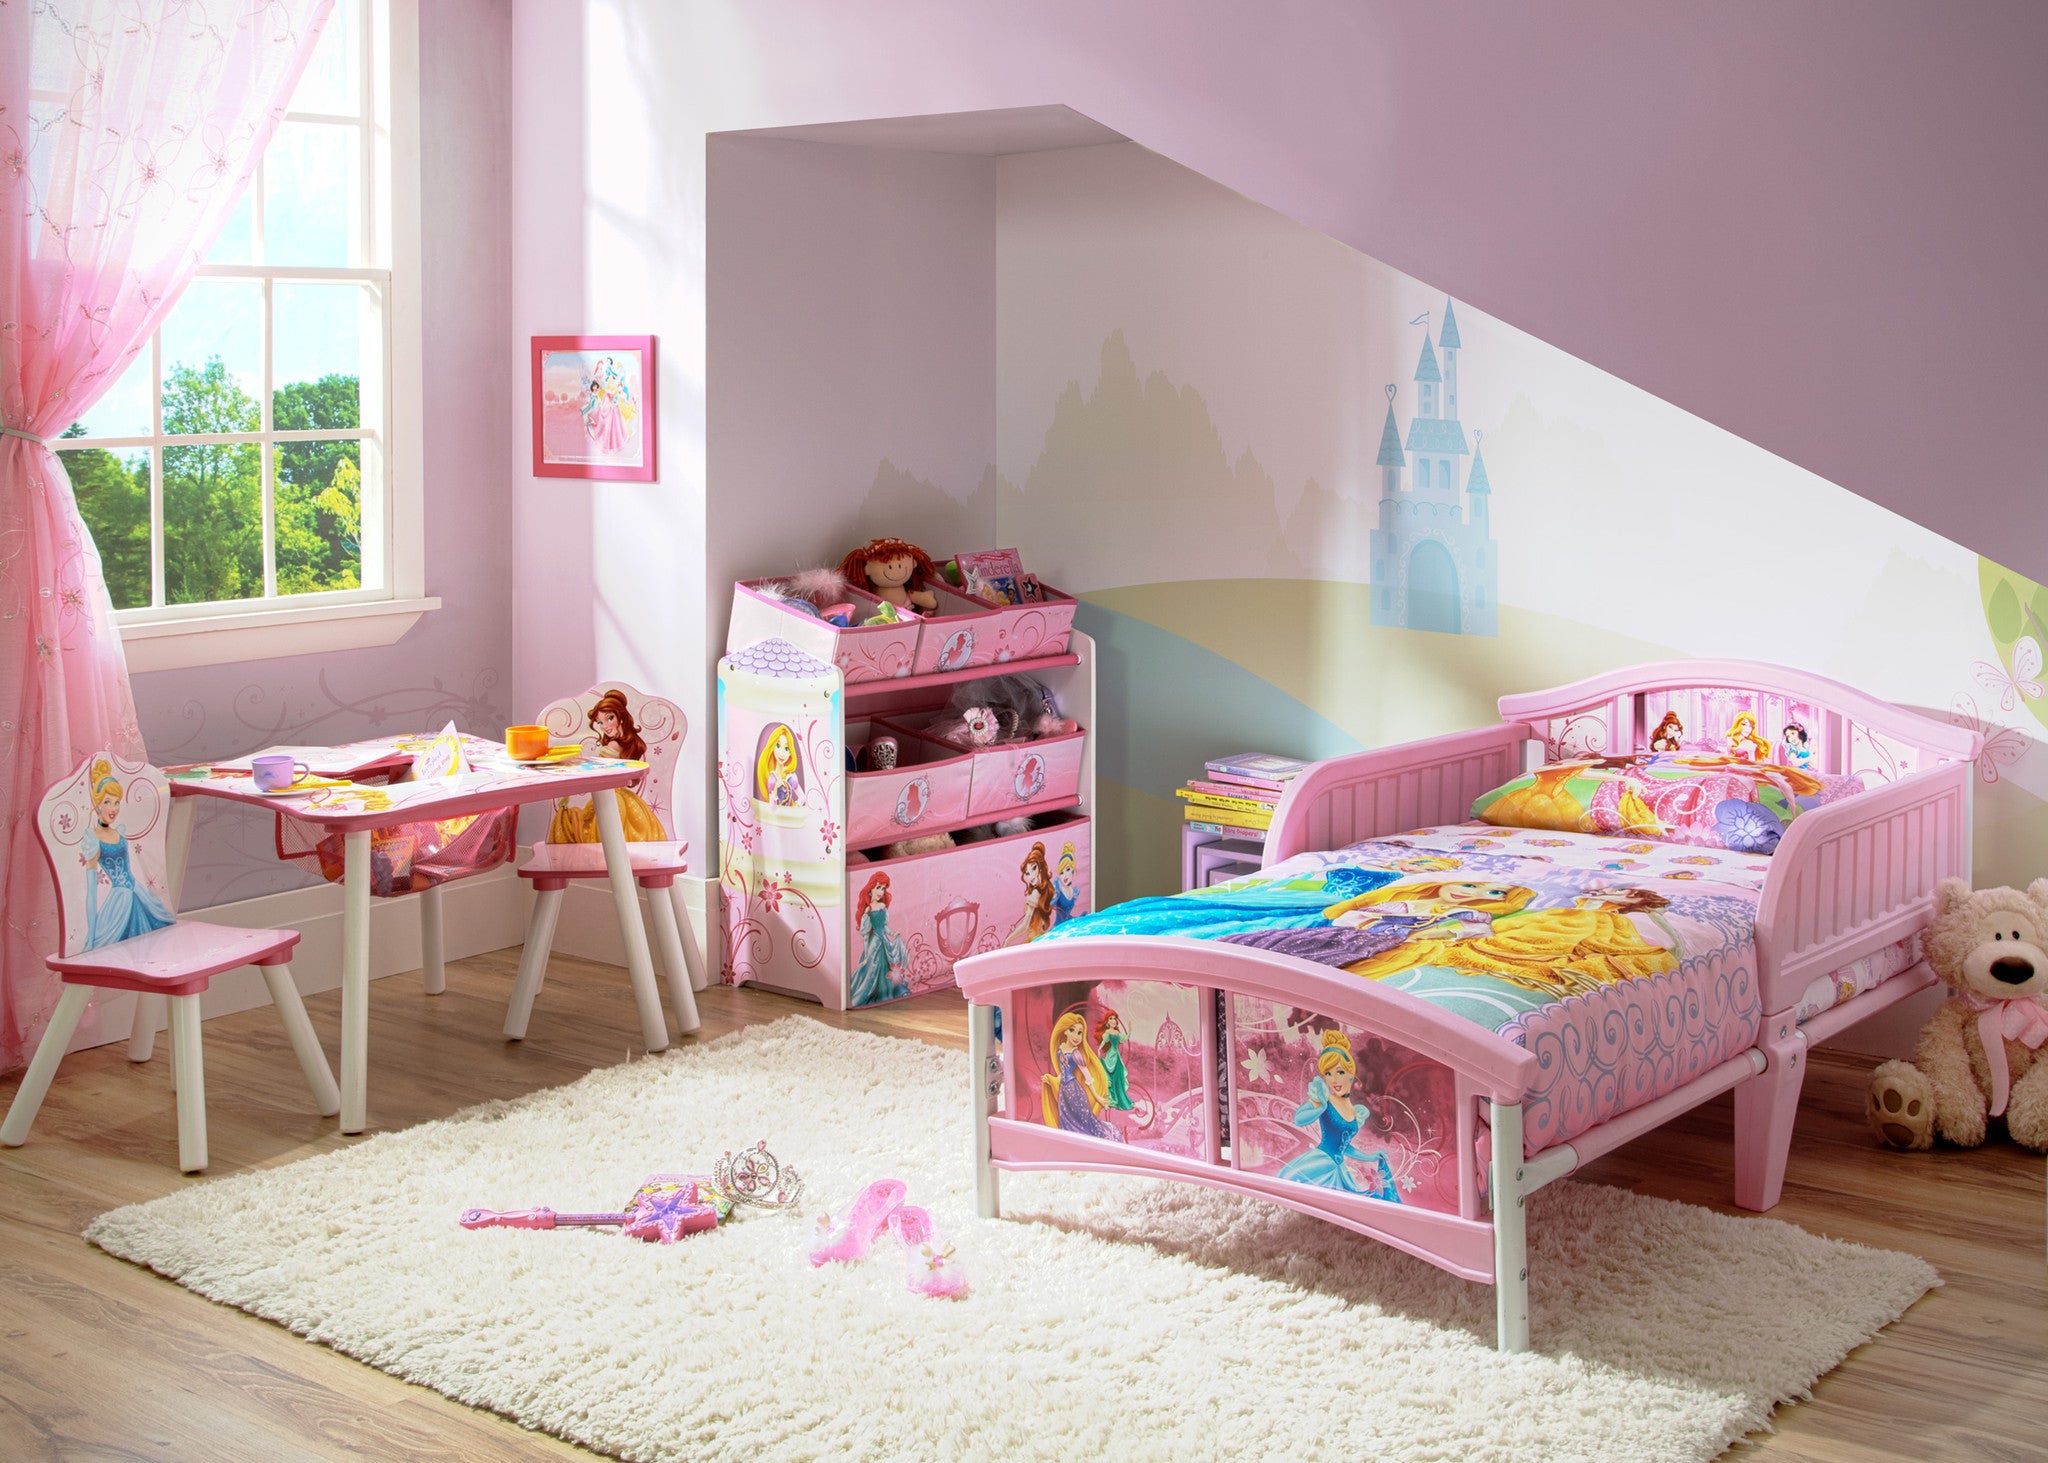 Disney Home Furniture - Beds set, Table set, Beanbag, Storage and more